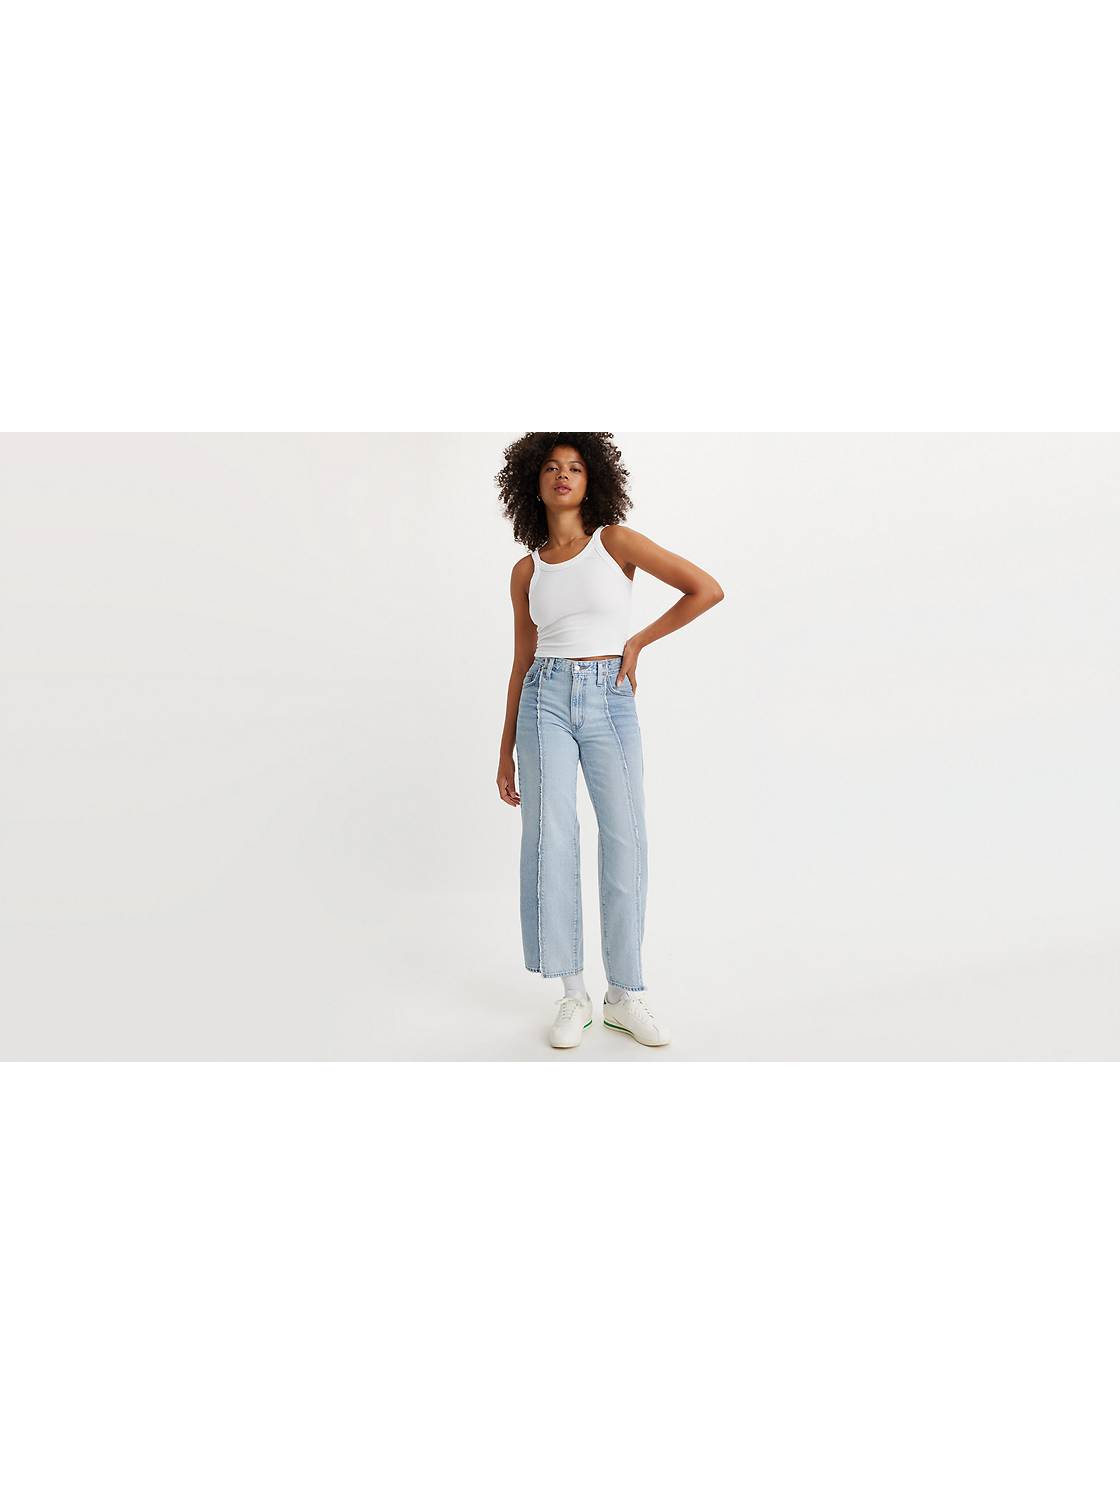 Women's Baggy Jeans: Shop Loose Fitting Women's Jeans